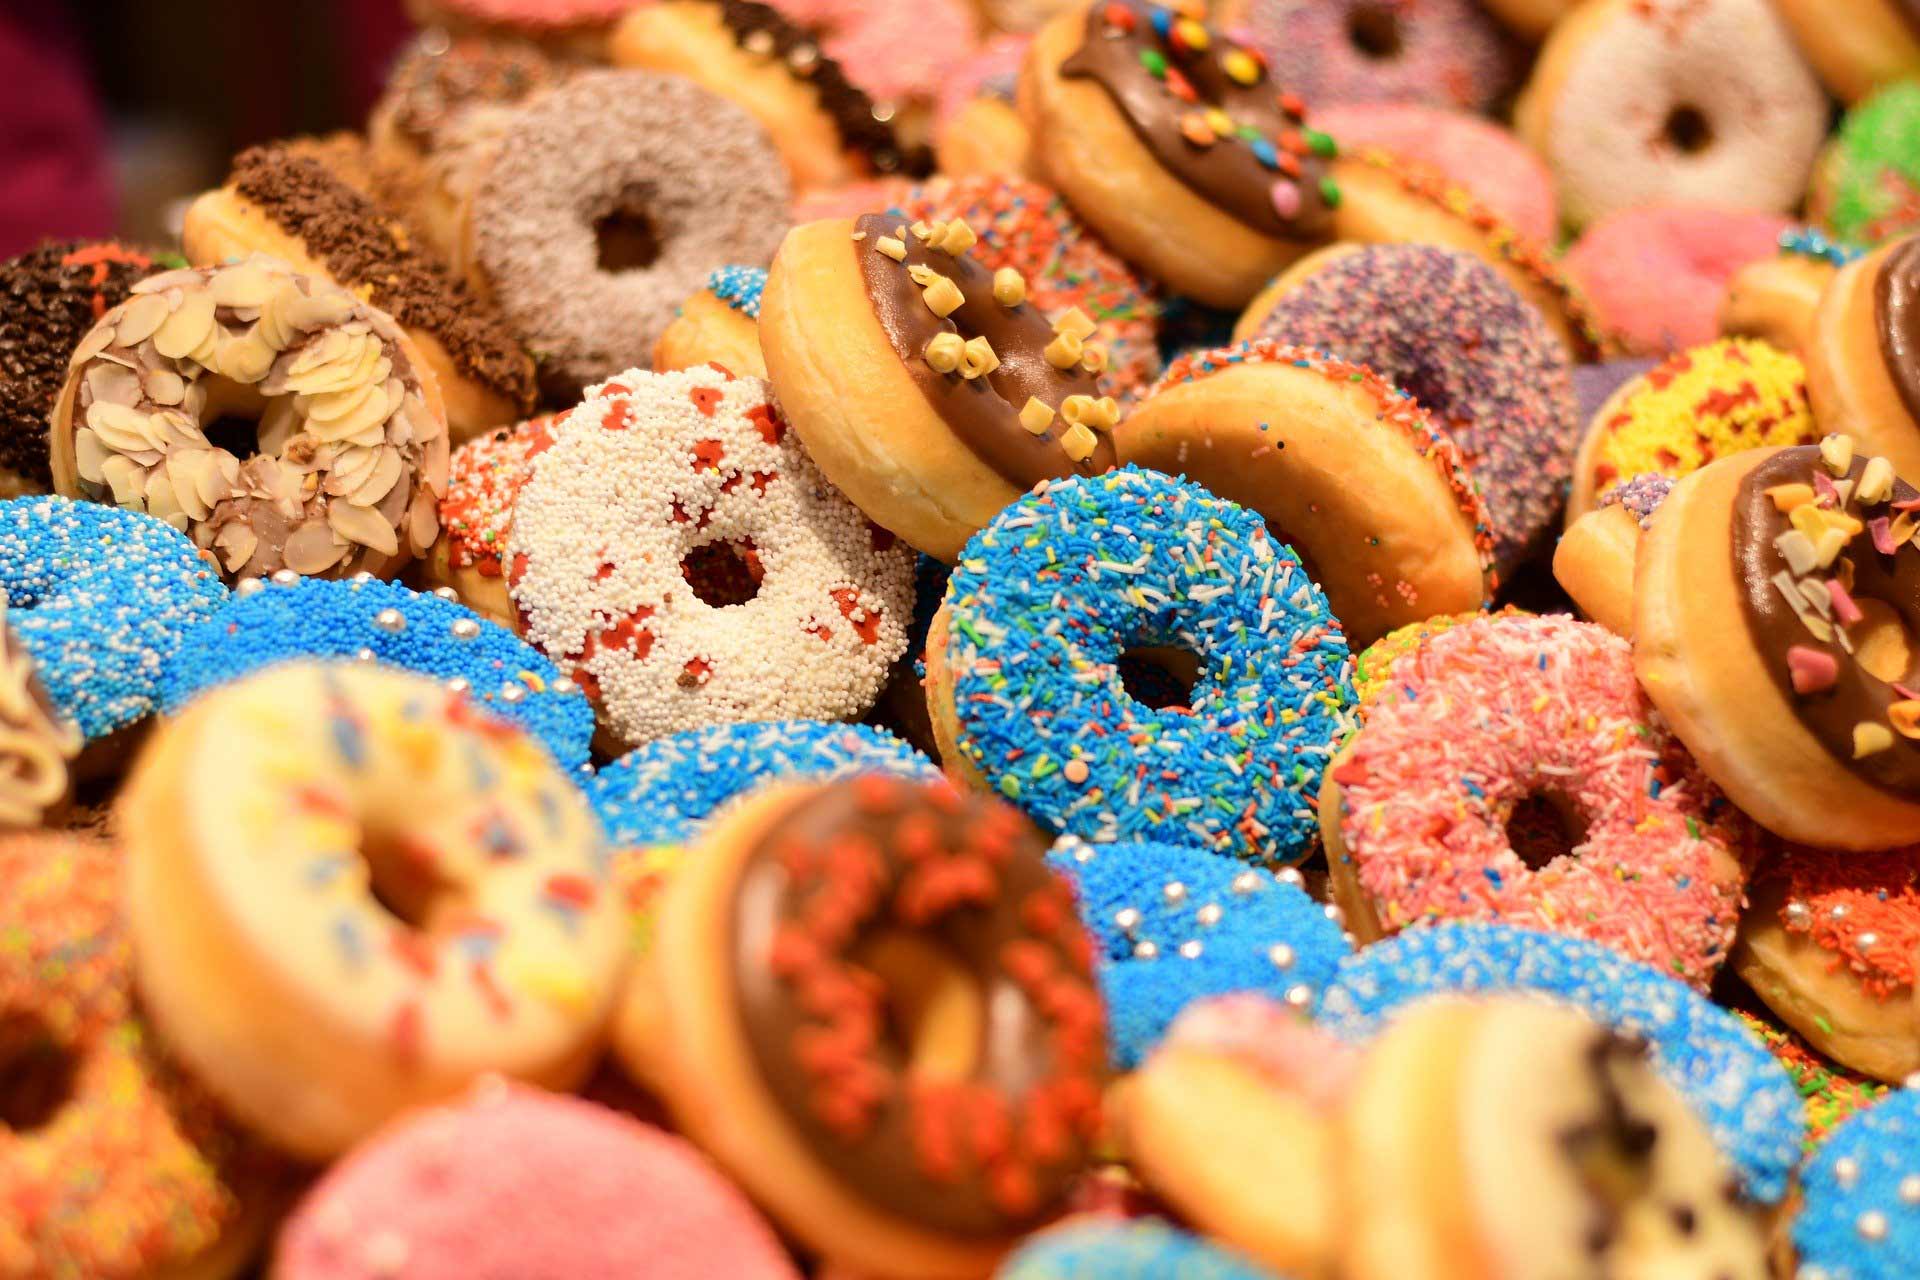 Kalorien in Joule umrechnen, buntglasierte Donuts